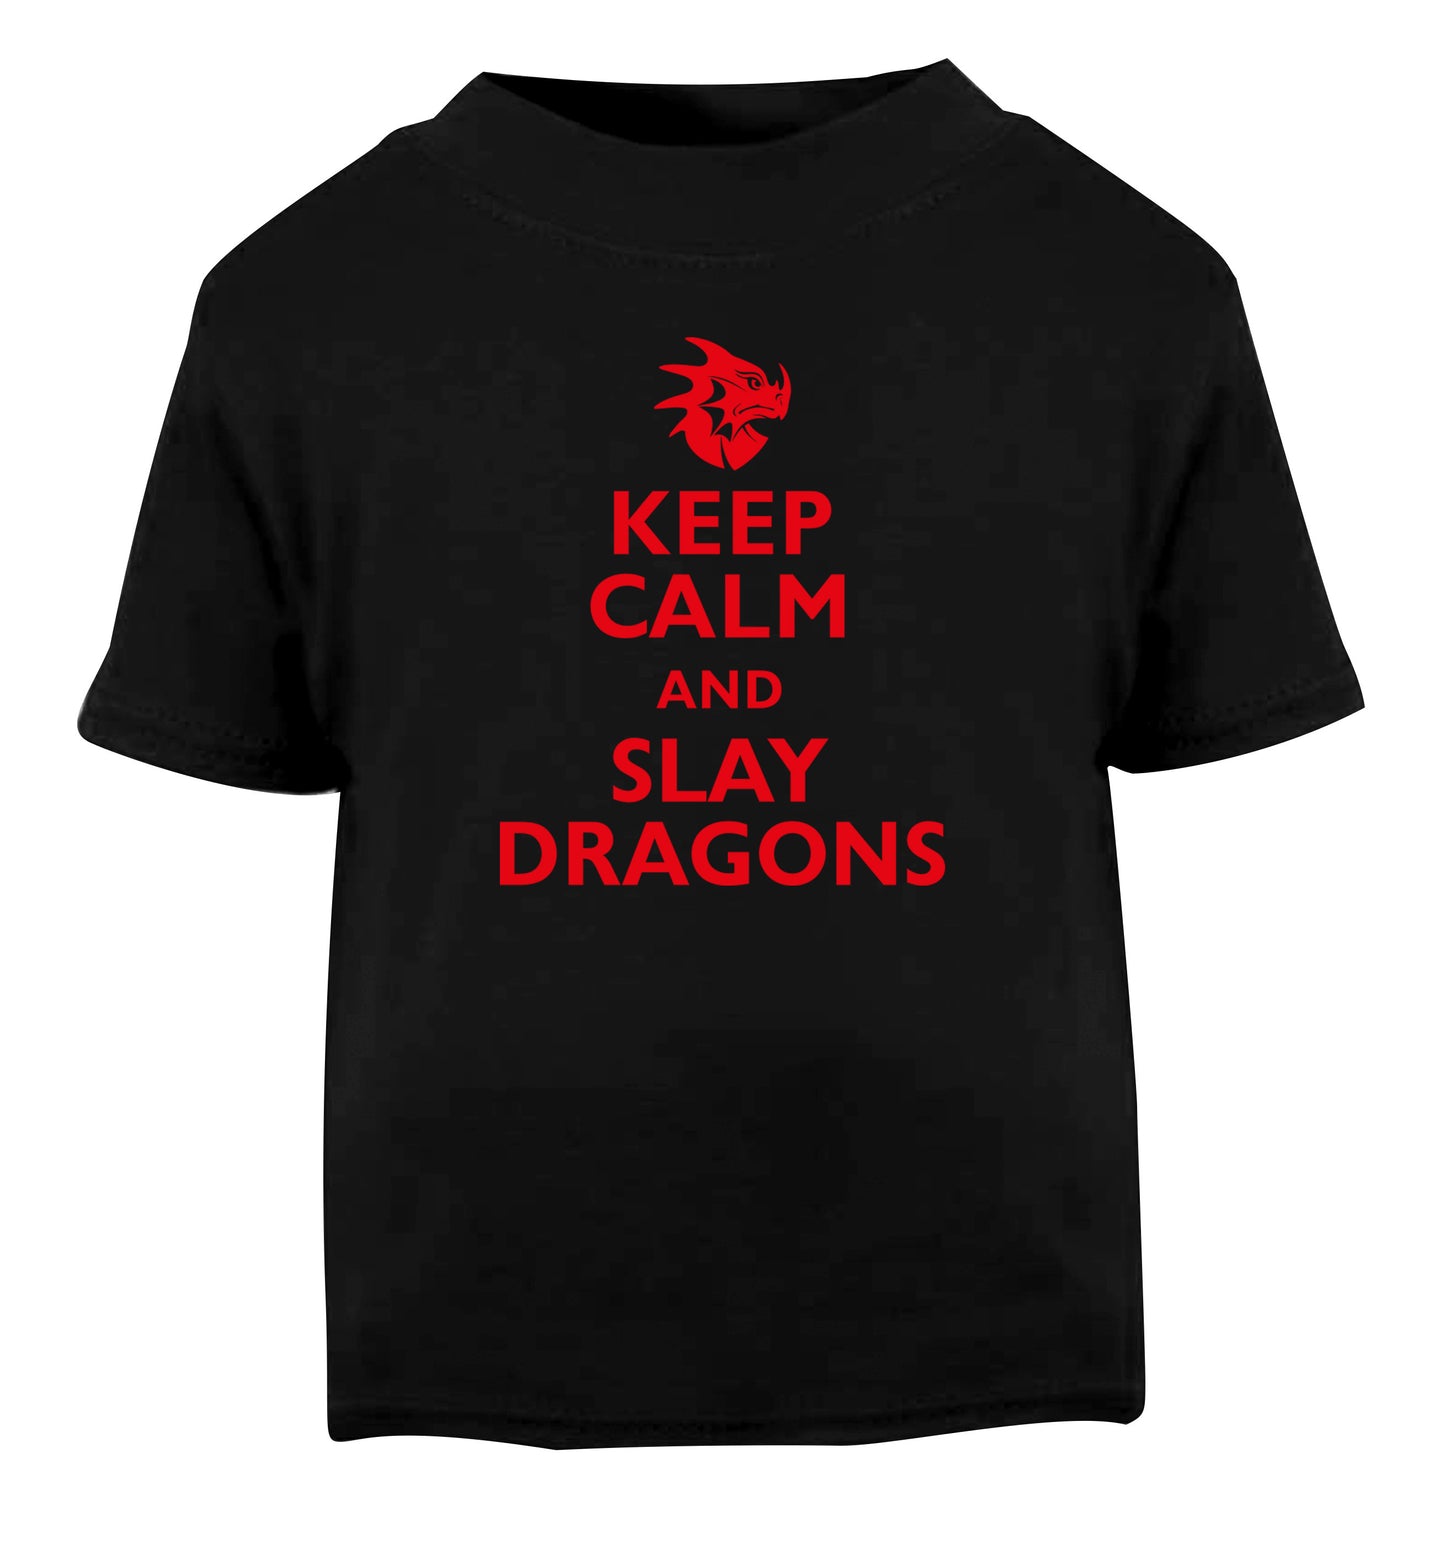 Keep calm and slay dragons Black Baby Toddler Tshirt 2 years